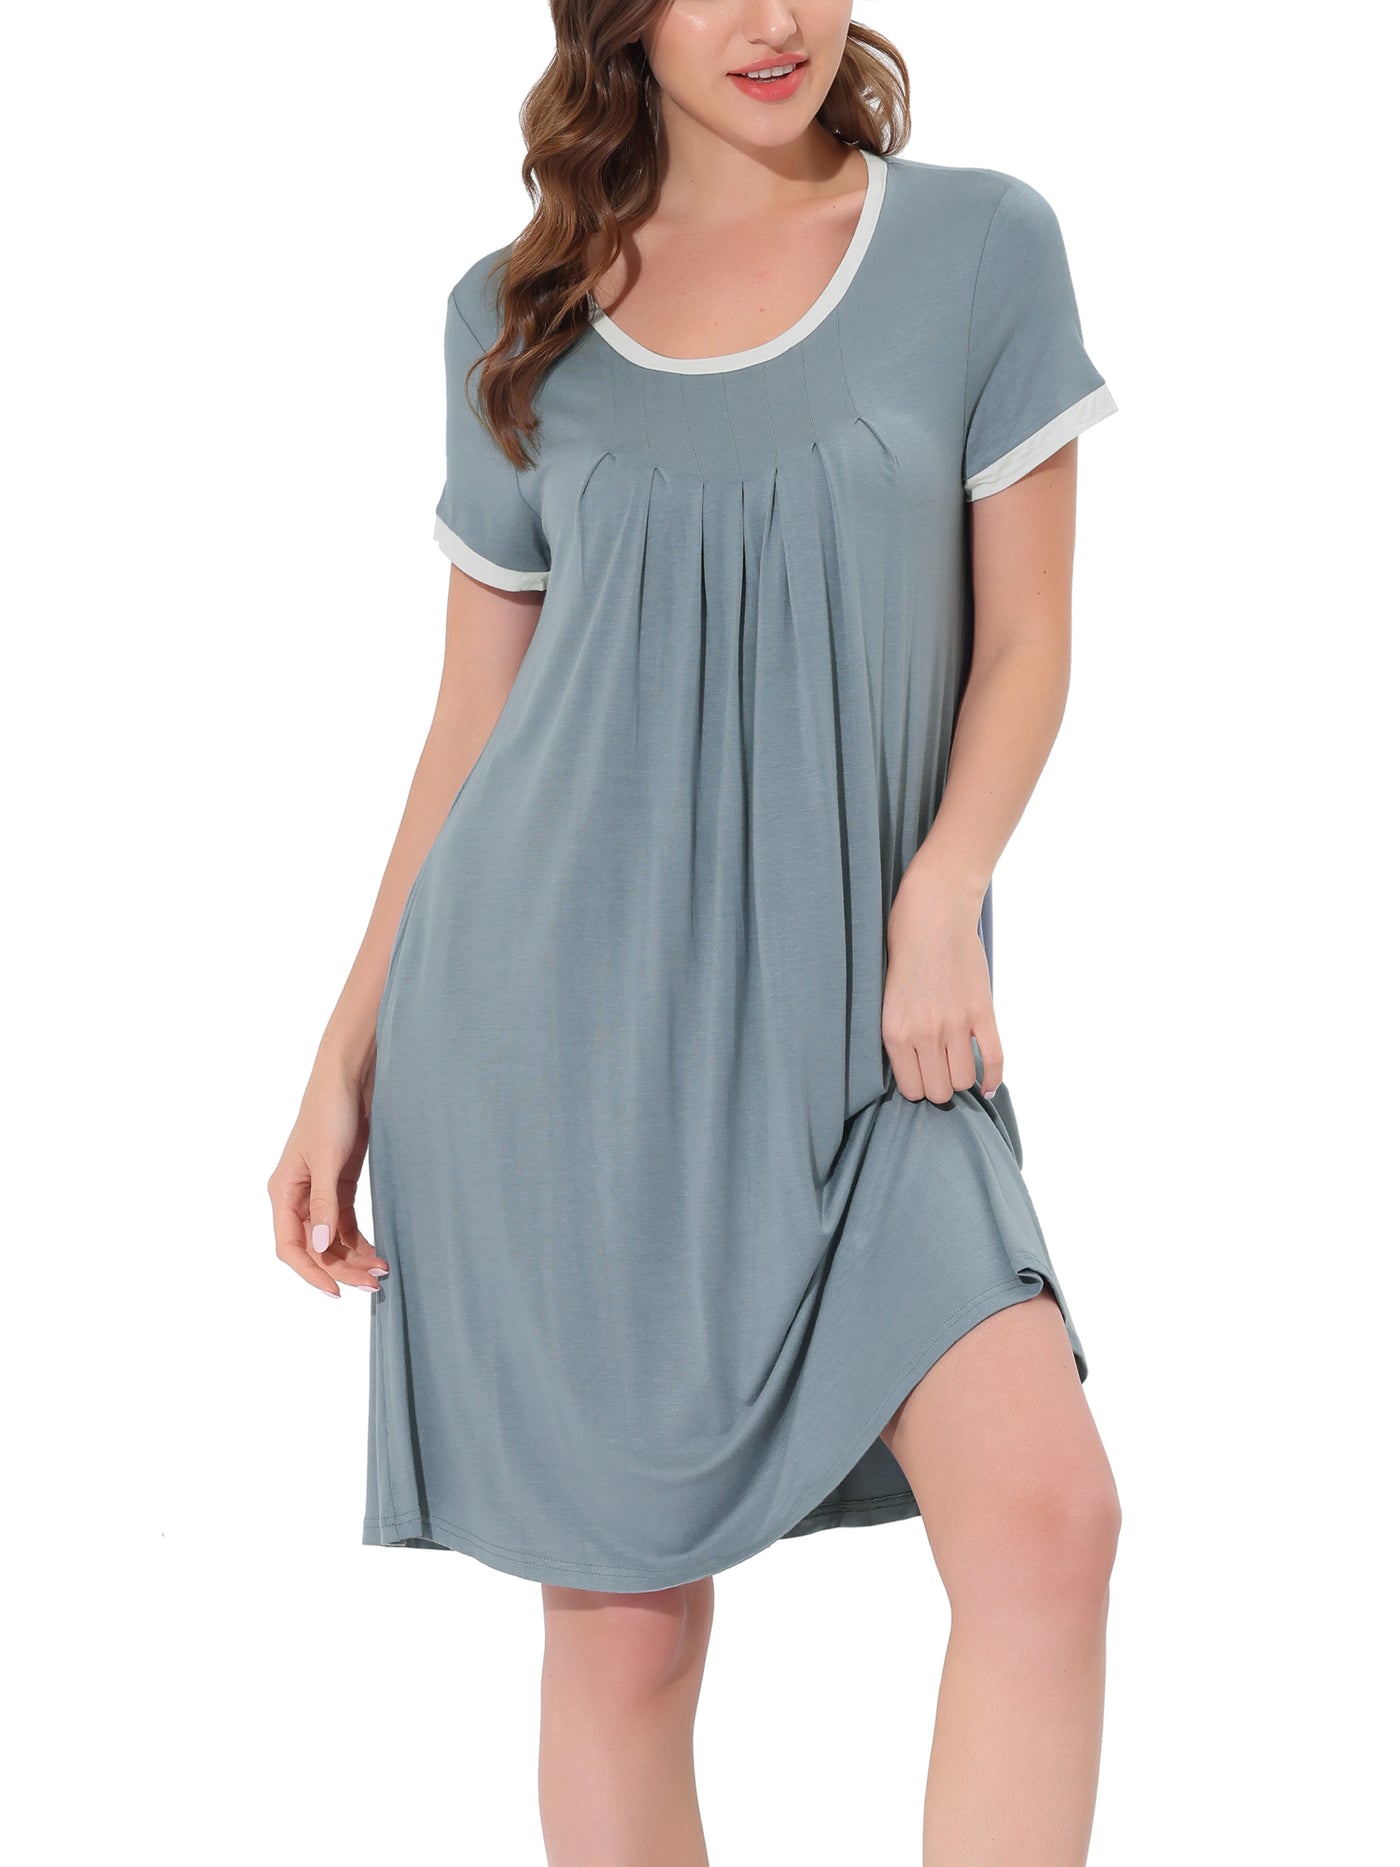 Bublédon Women's Sleepwear Pajama Dress Soft Nightshirt with Pockets Lounge Nightgown